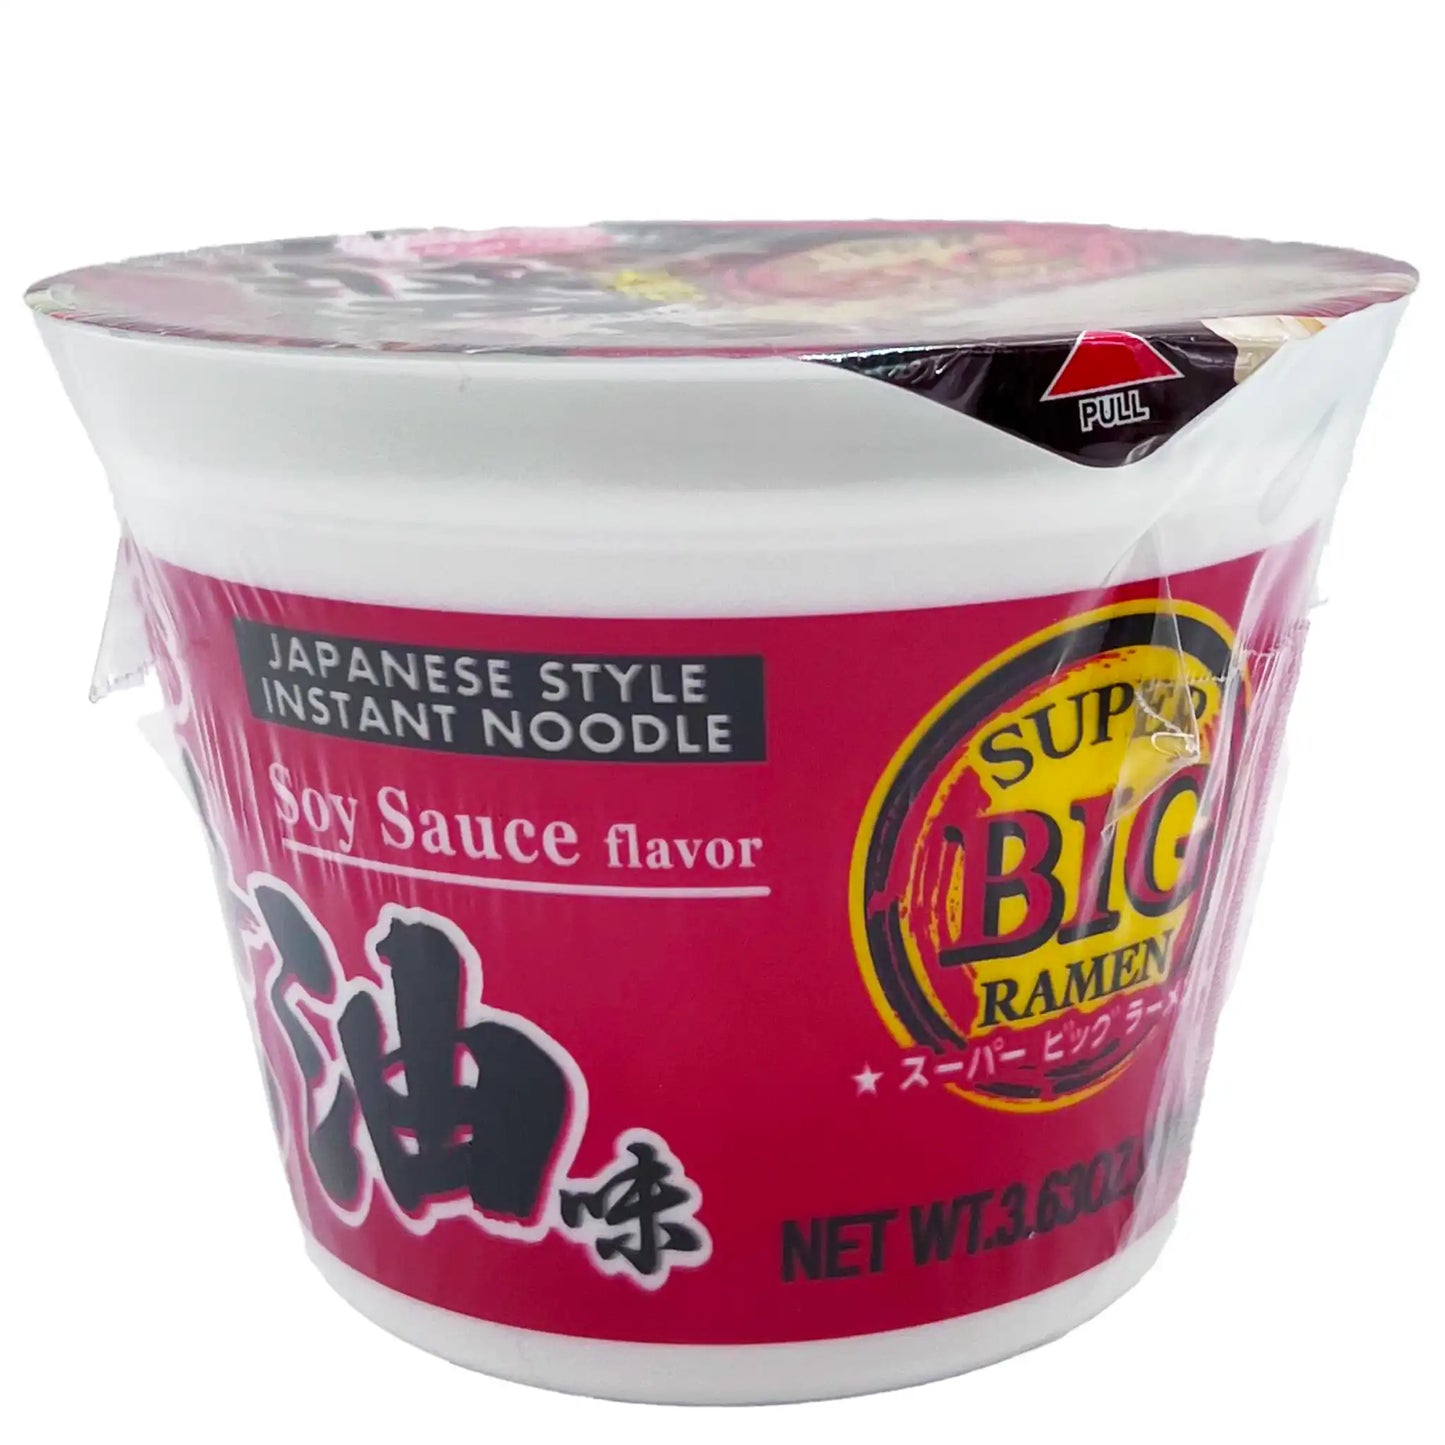 Acecook Super Big Instant Ramen Cup, Soy Sauce Flavor 3.63 oz